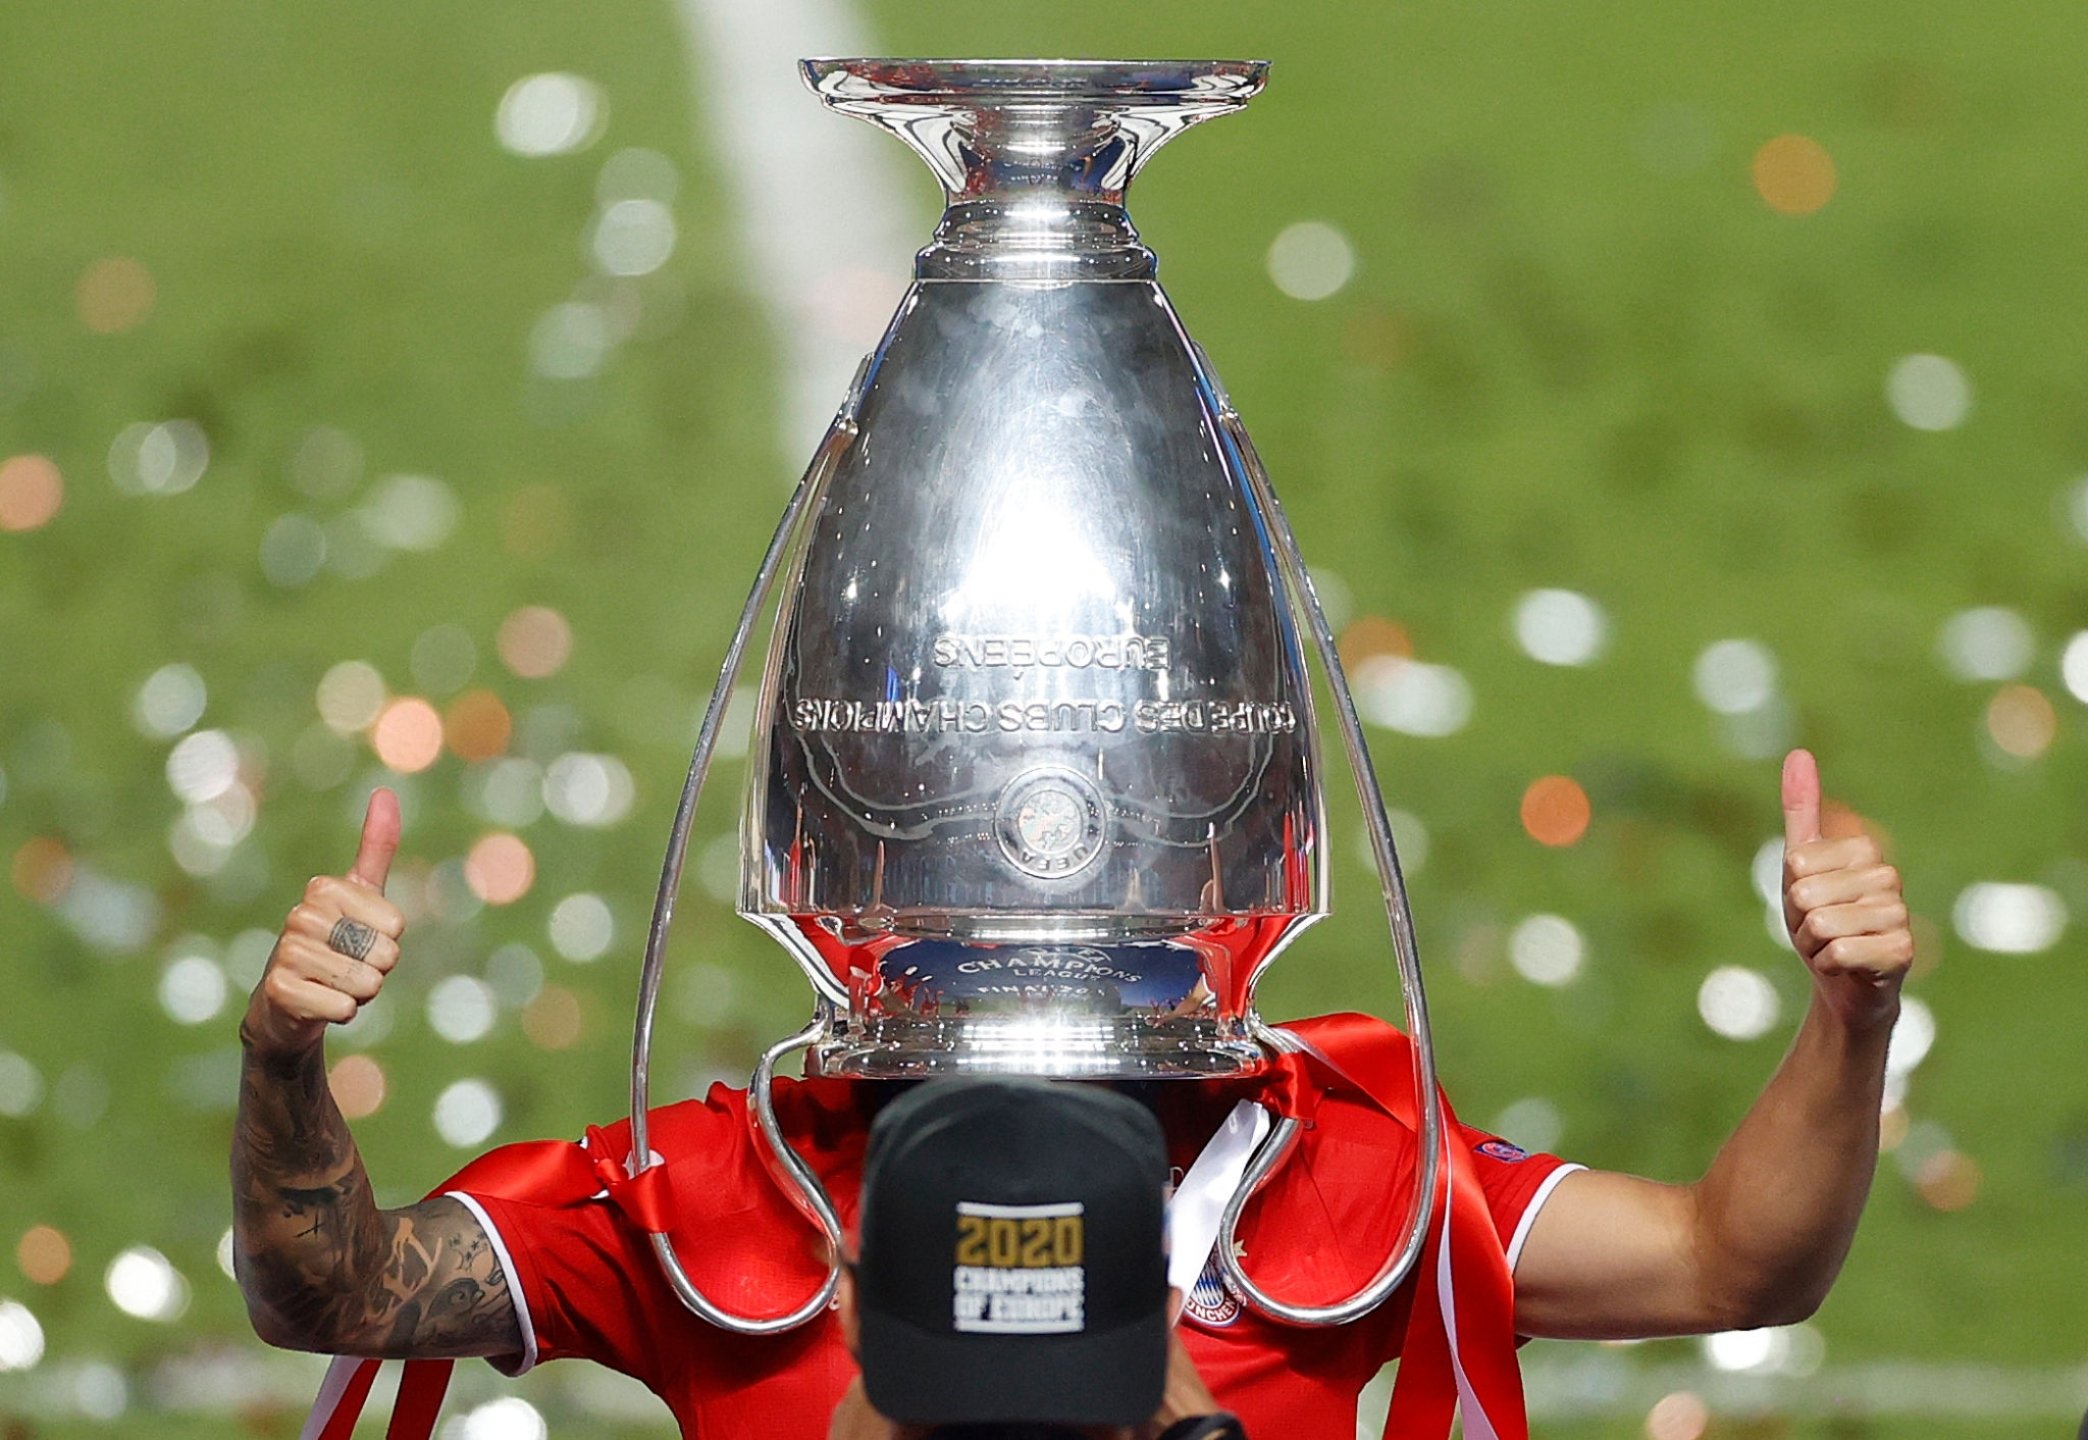 بایرن مونیخ - Bayern Munich - لیگ قهرمانان اروپا - UCL - فینال لیگ قهرمانان اروپا - بازی مقابل پاری سن ژرمن - جشن قهرمانی